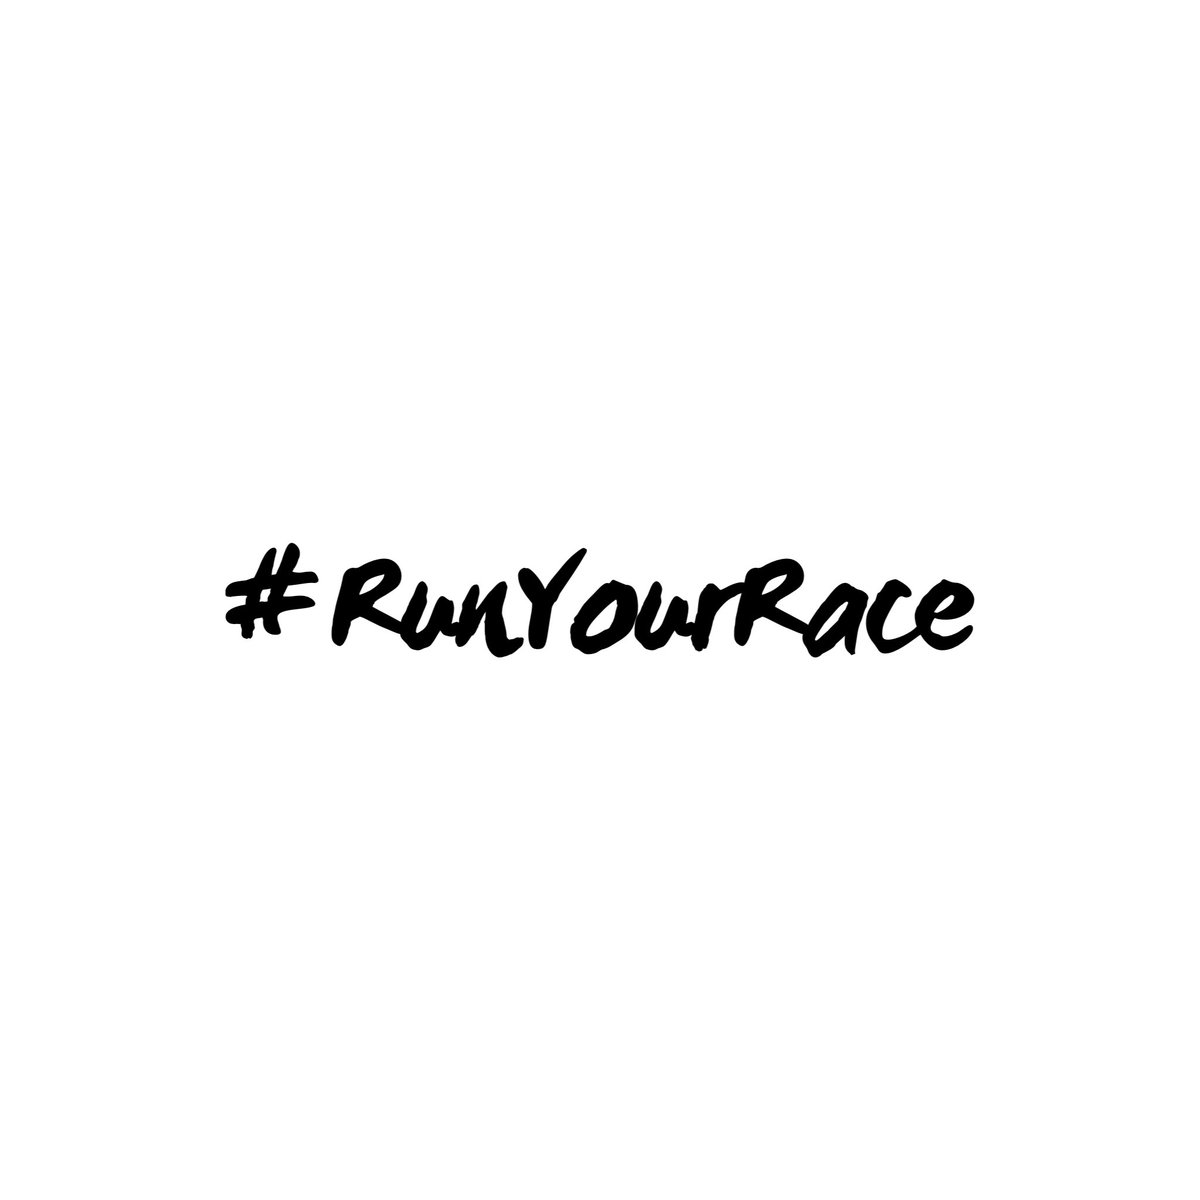 #RunYourRace